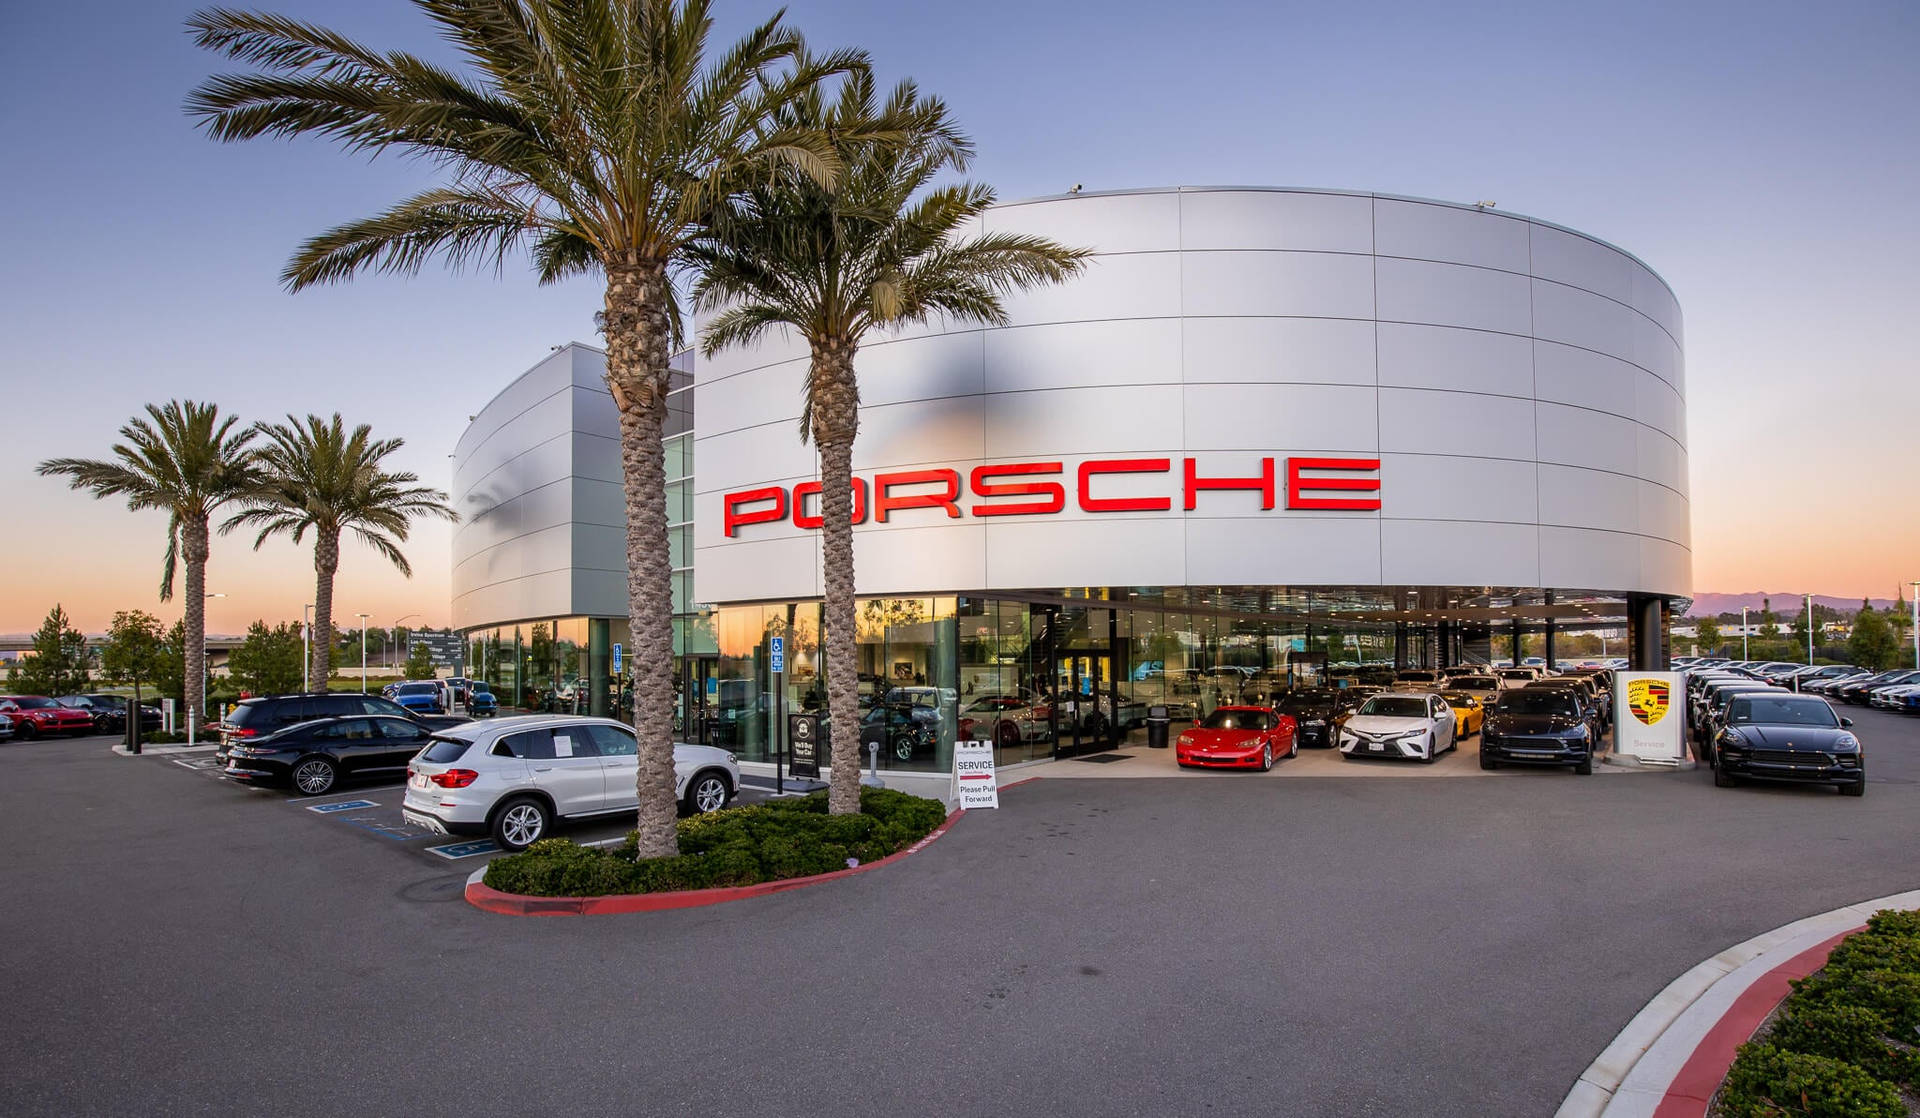 Porsche Car Dealer In Irvine California Wallpaper